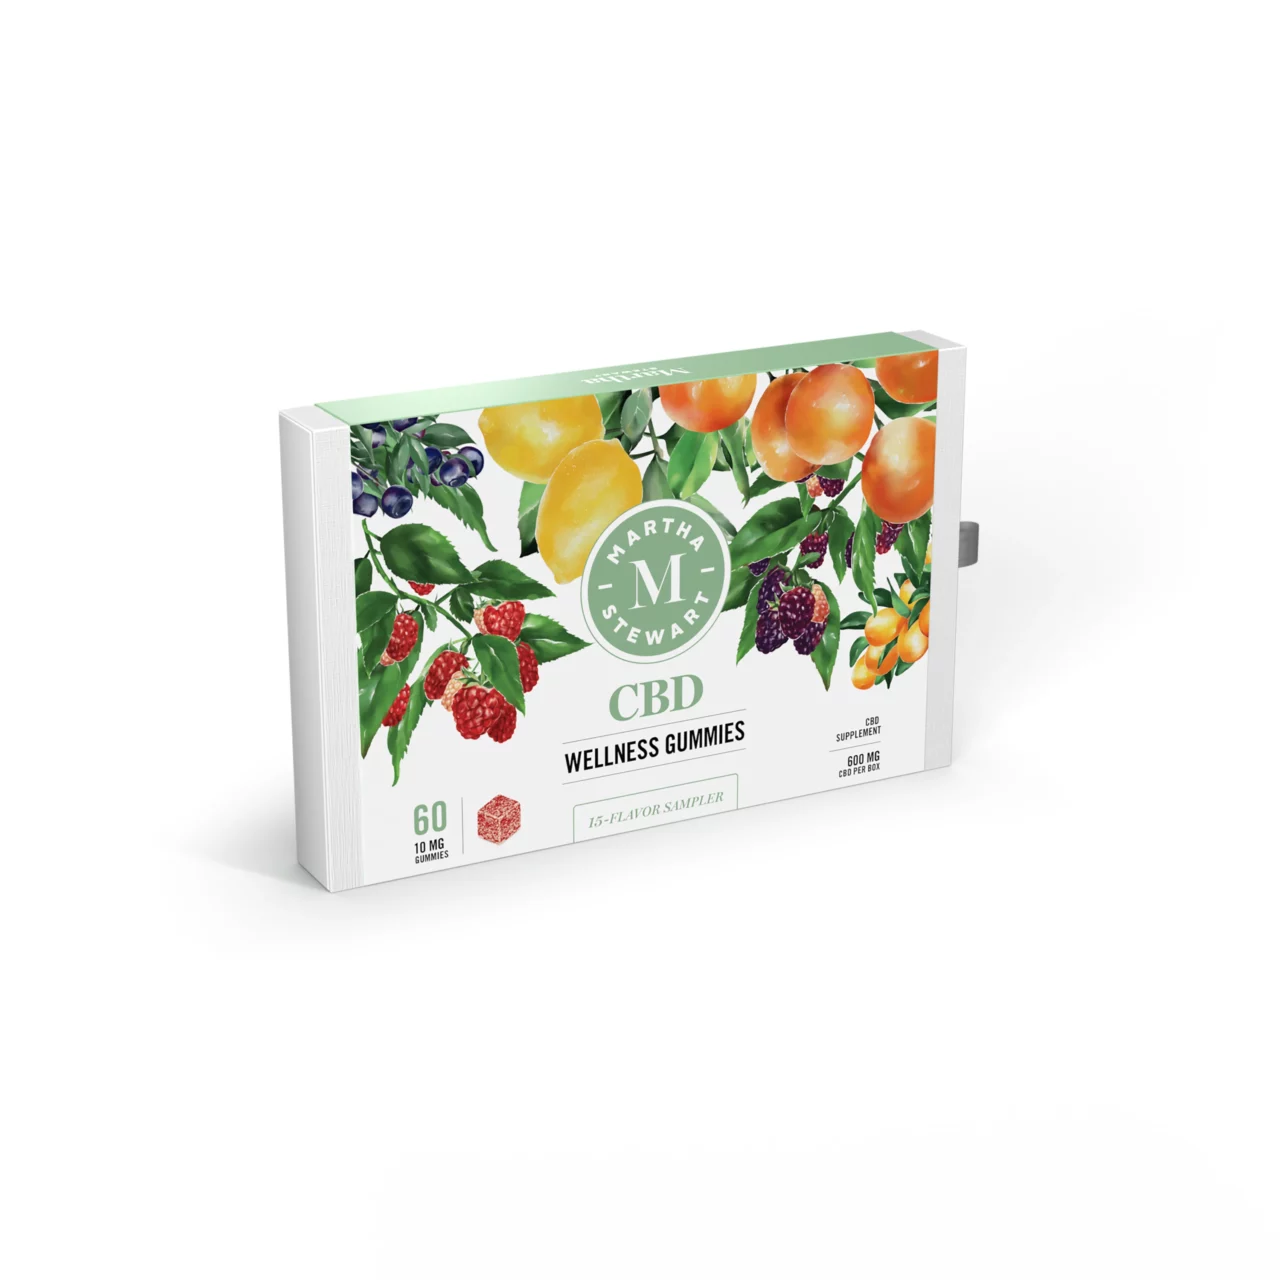 Martha Stewart CBD, 15 Flavor Sampler, Wellness Gummies, Isolate THC-Free, 60ct, 600mg CBD 1